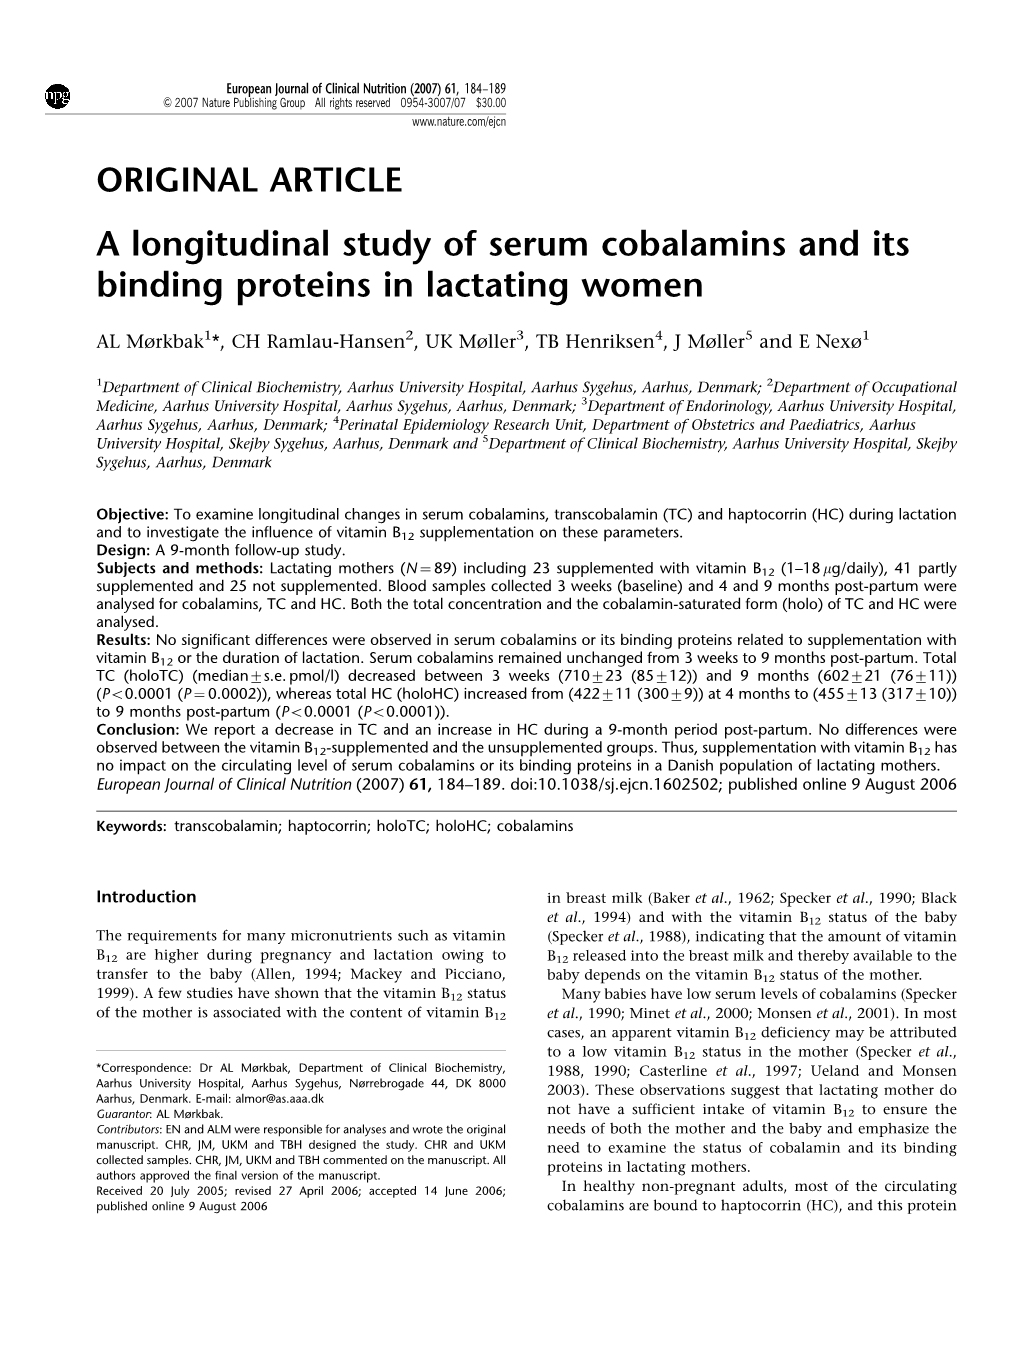 A Longitudinal Study of Serum Cobalamins and Its Binding Proteins in Lactating Women